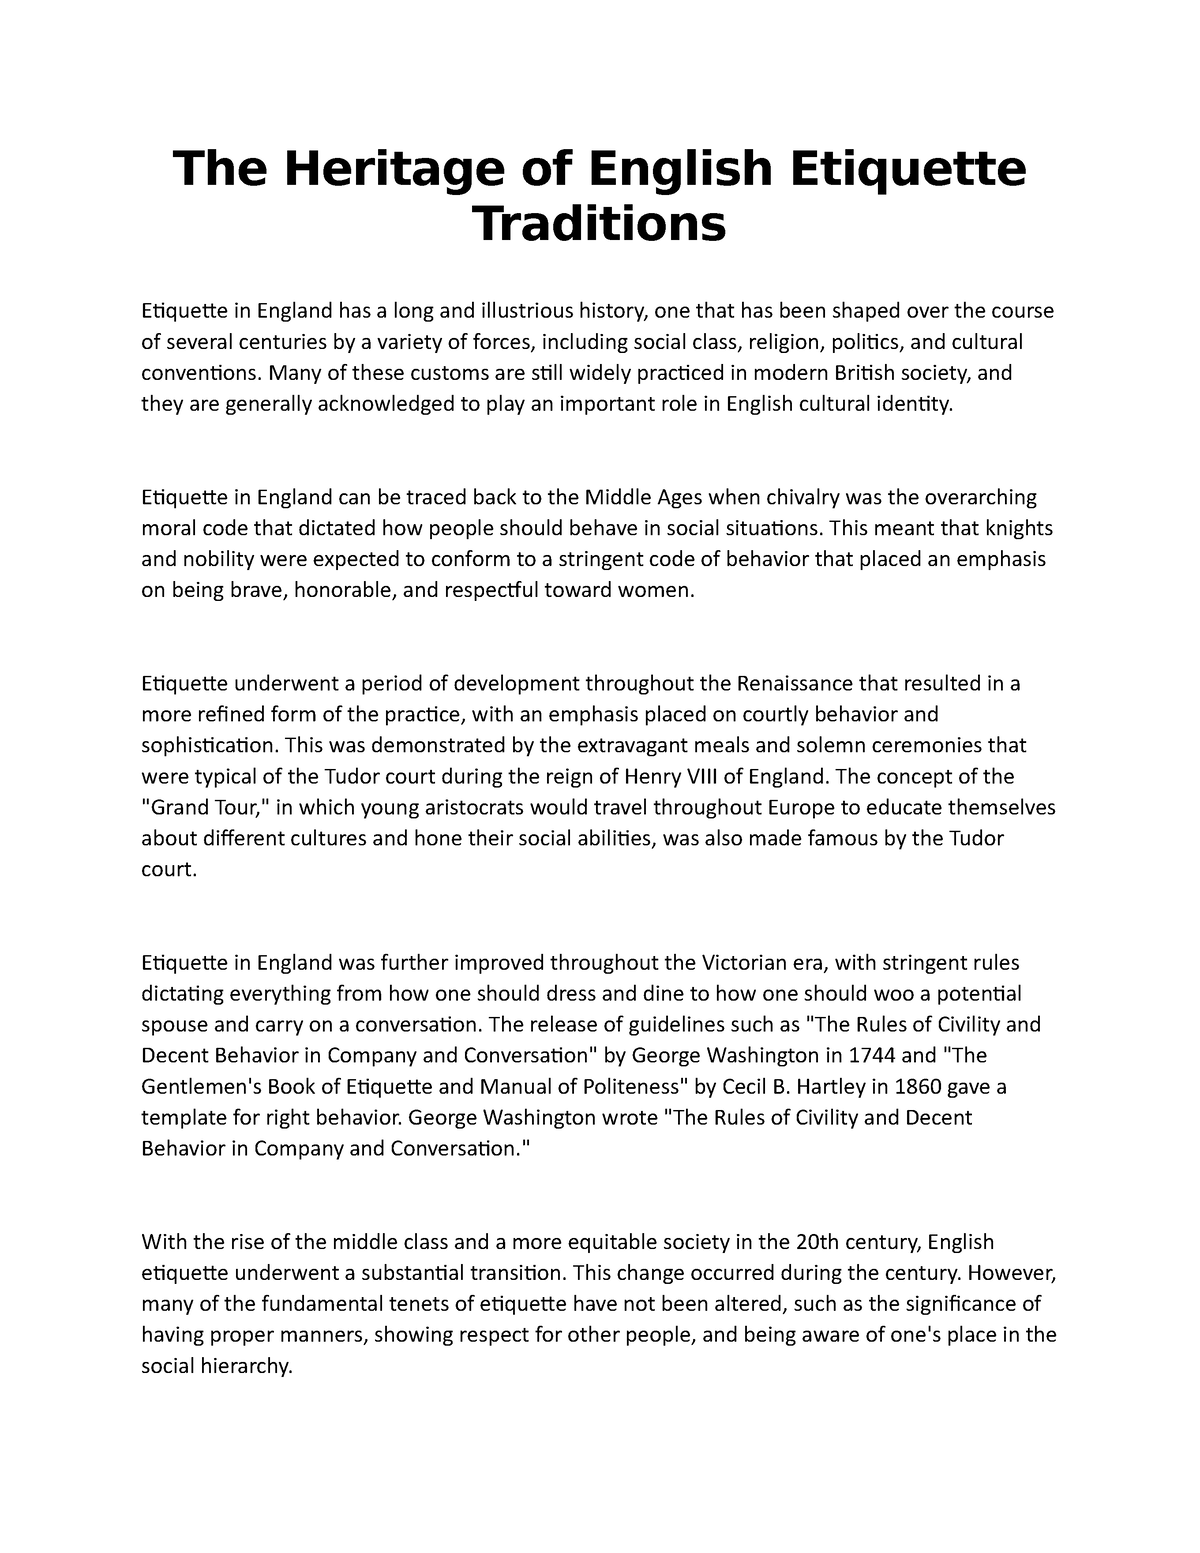 english traditions essay